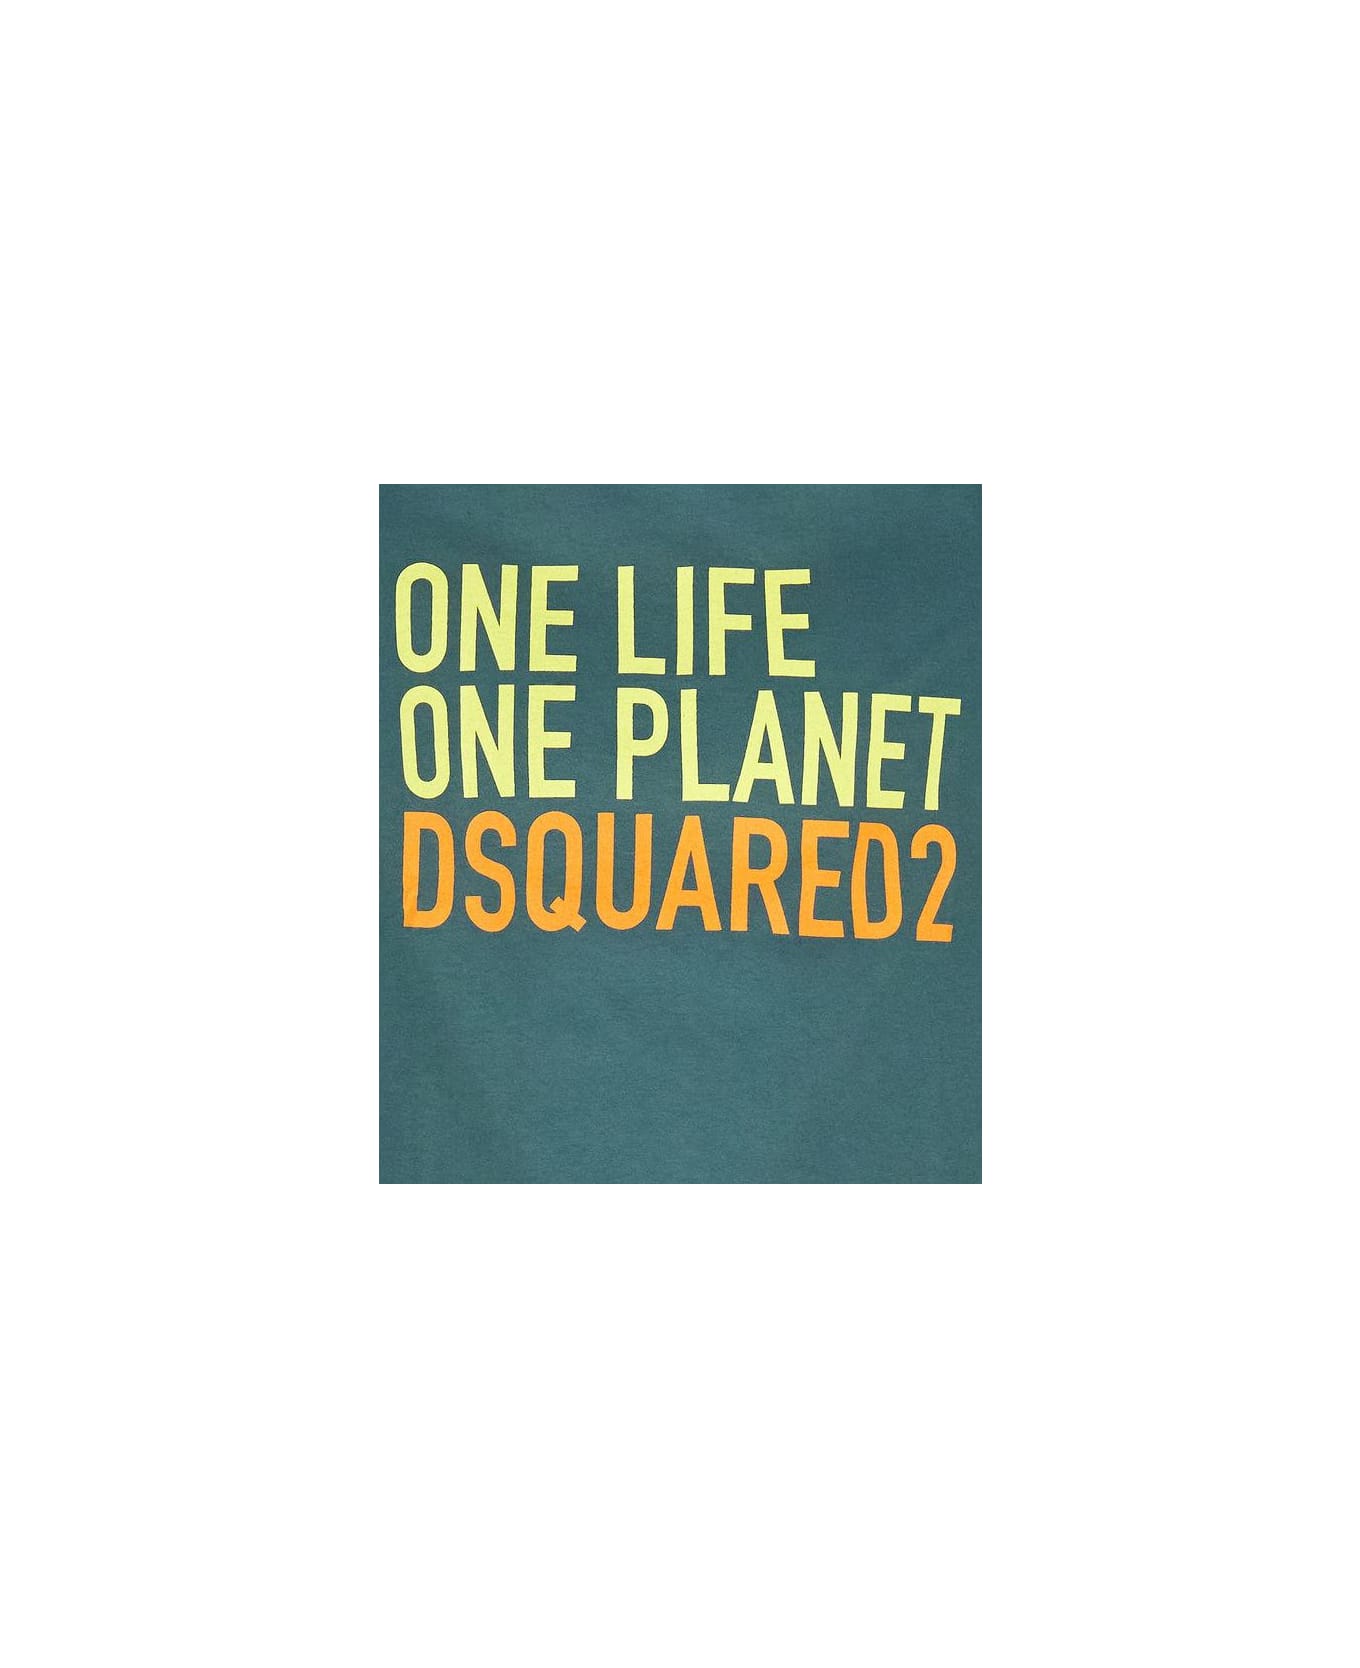 Dsquared2 T-shirts - Sea pine